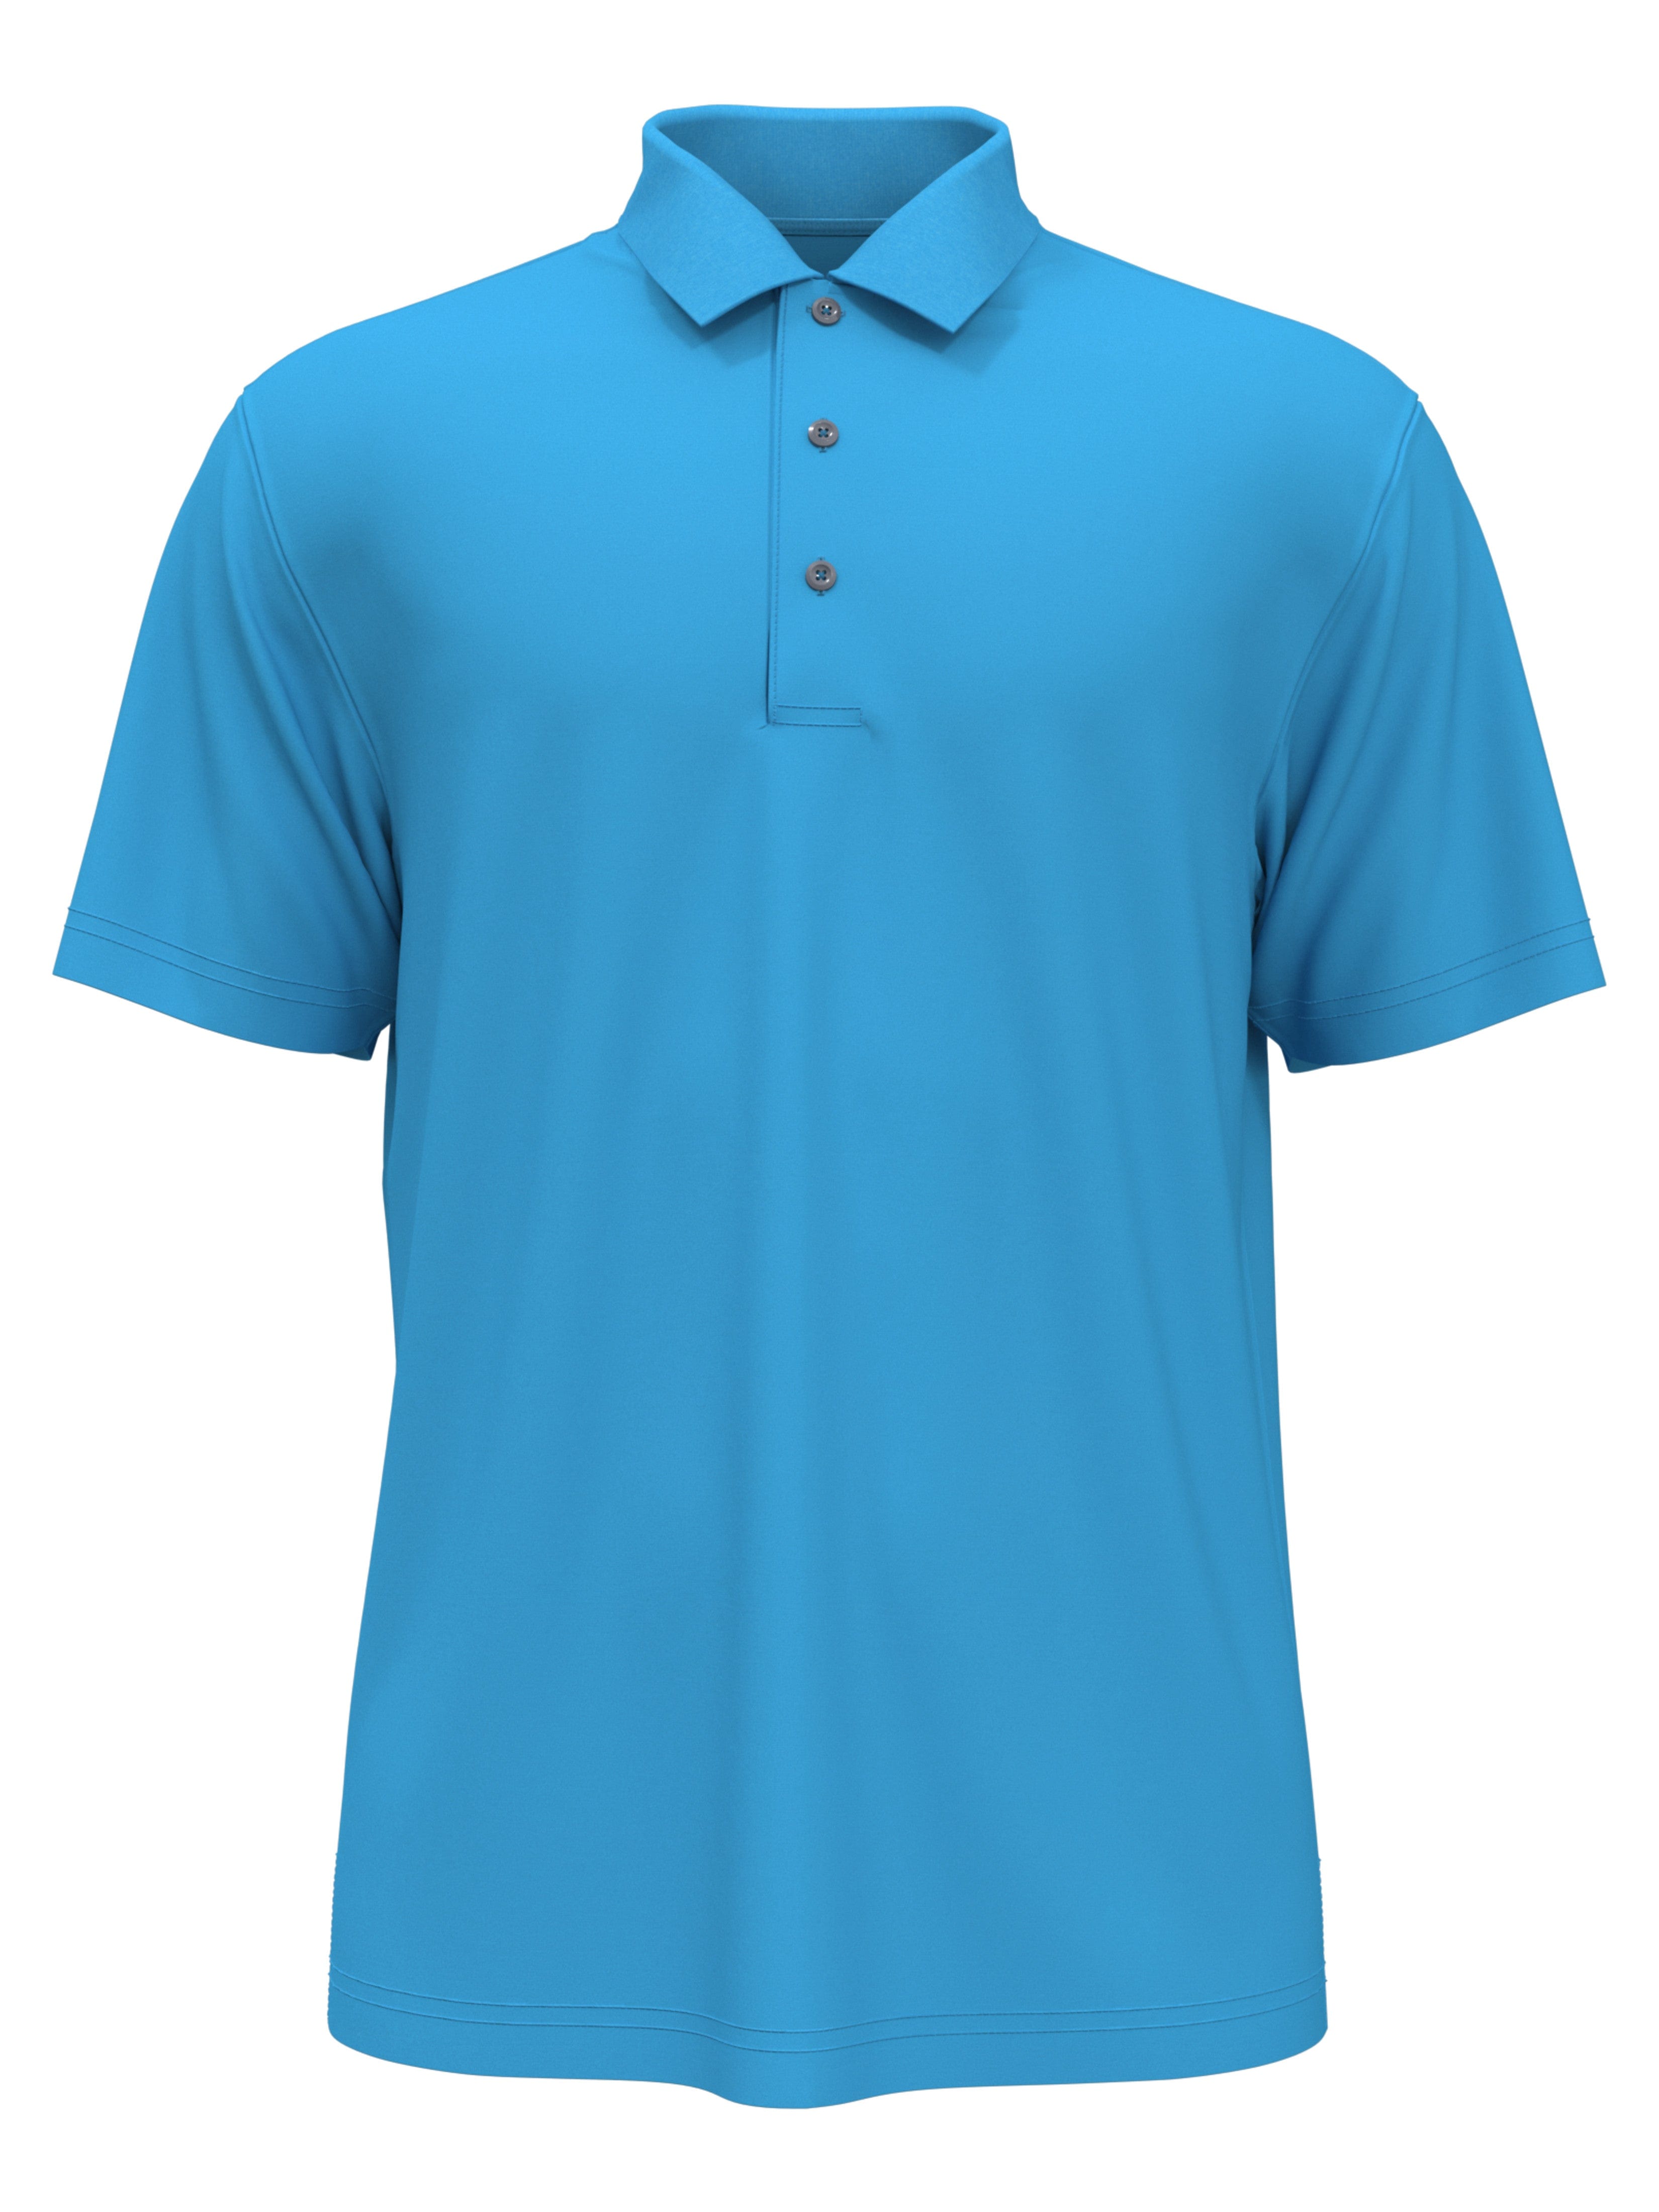 PGA TOUR Apparel Boys AirFlux™ Solid Mesh Golf Polo Shirt, Size Large, Blue Blossom, 100% Polyester | Golf Apparel Shop